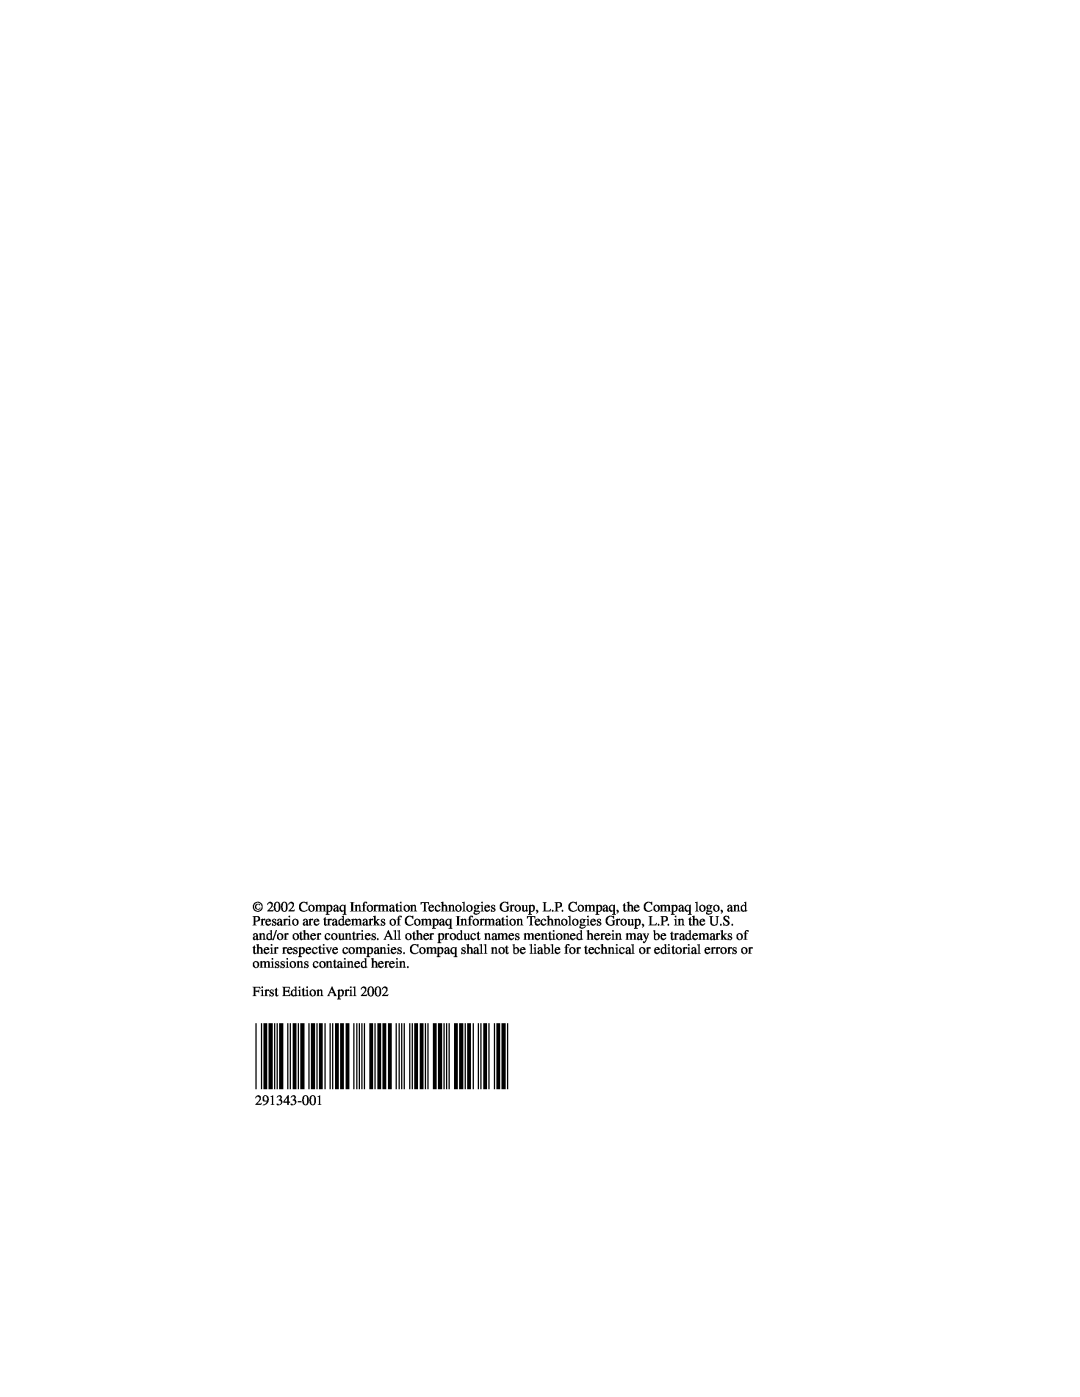 HP 2806EA manual First Edition April, 291343-001 